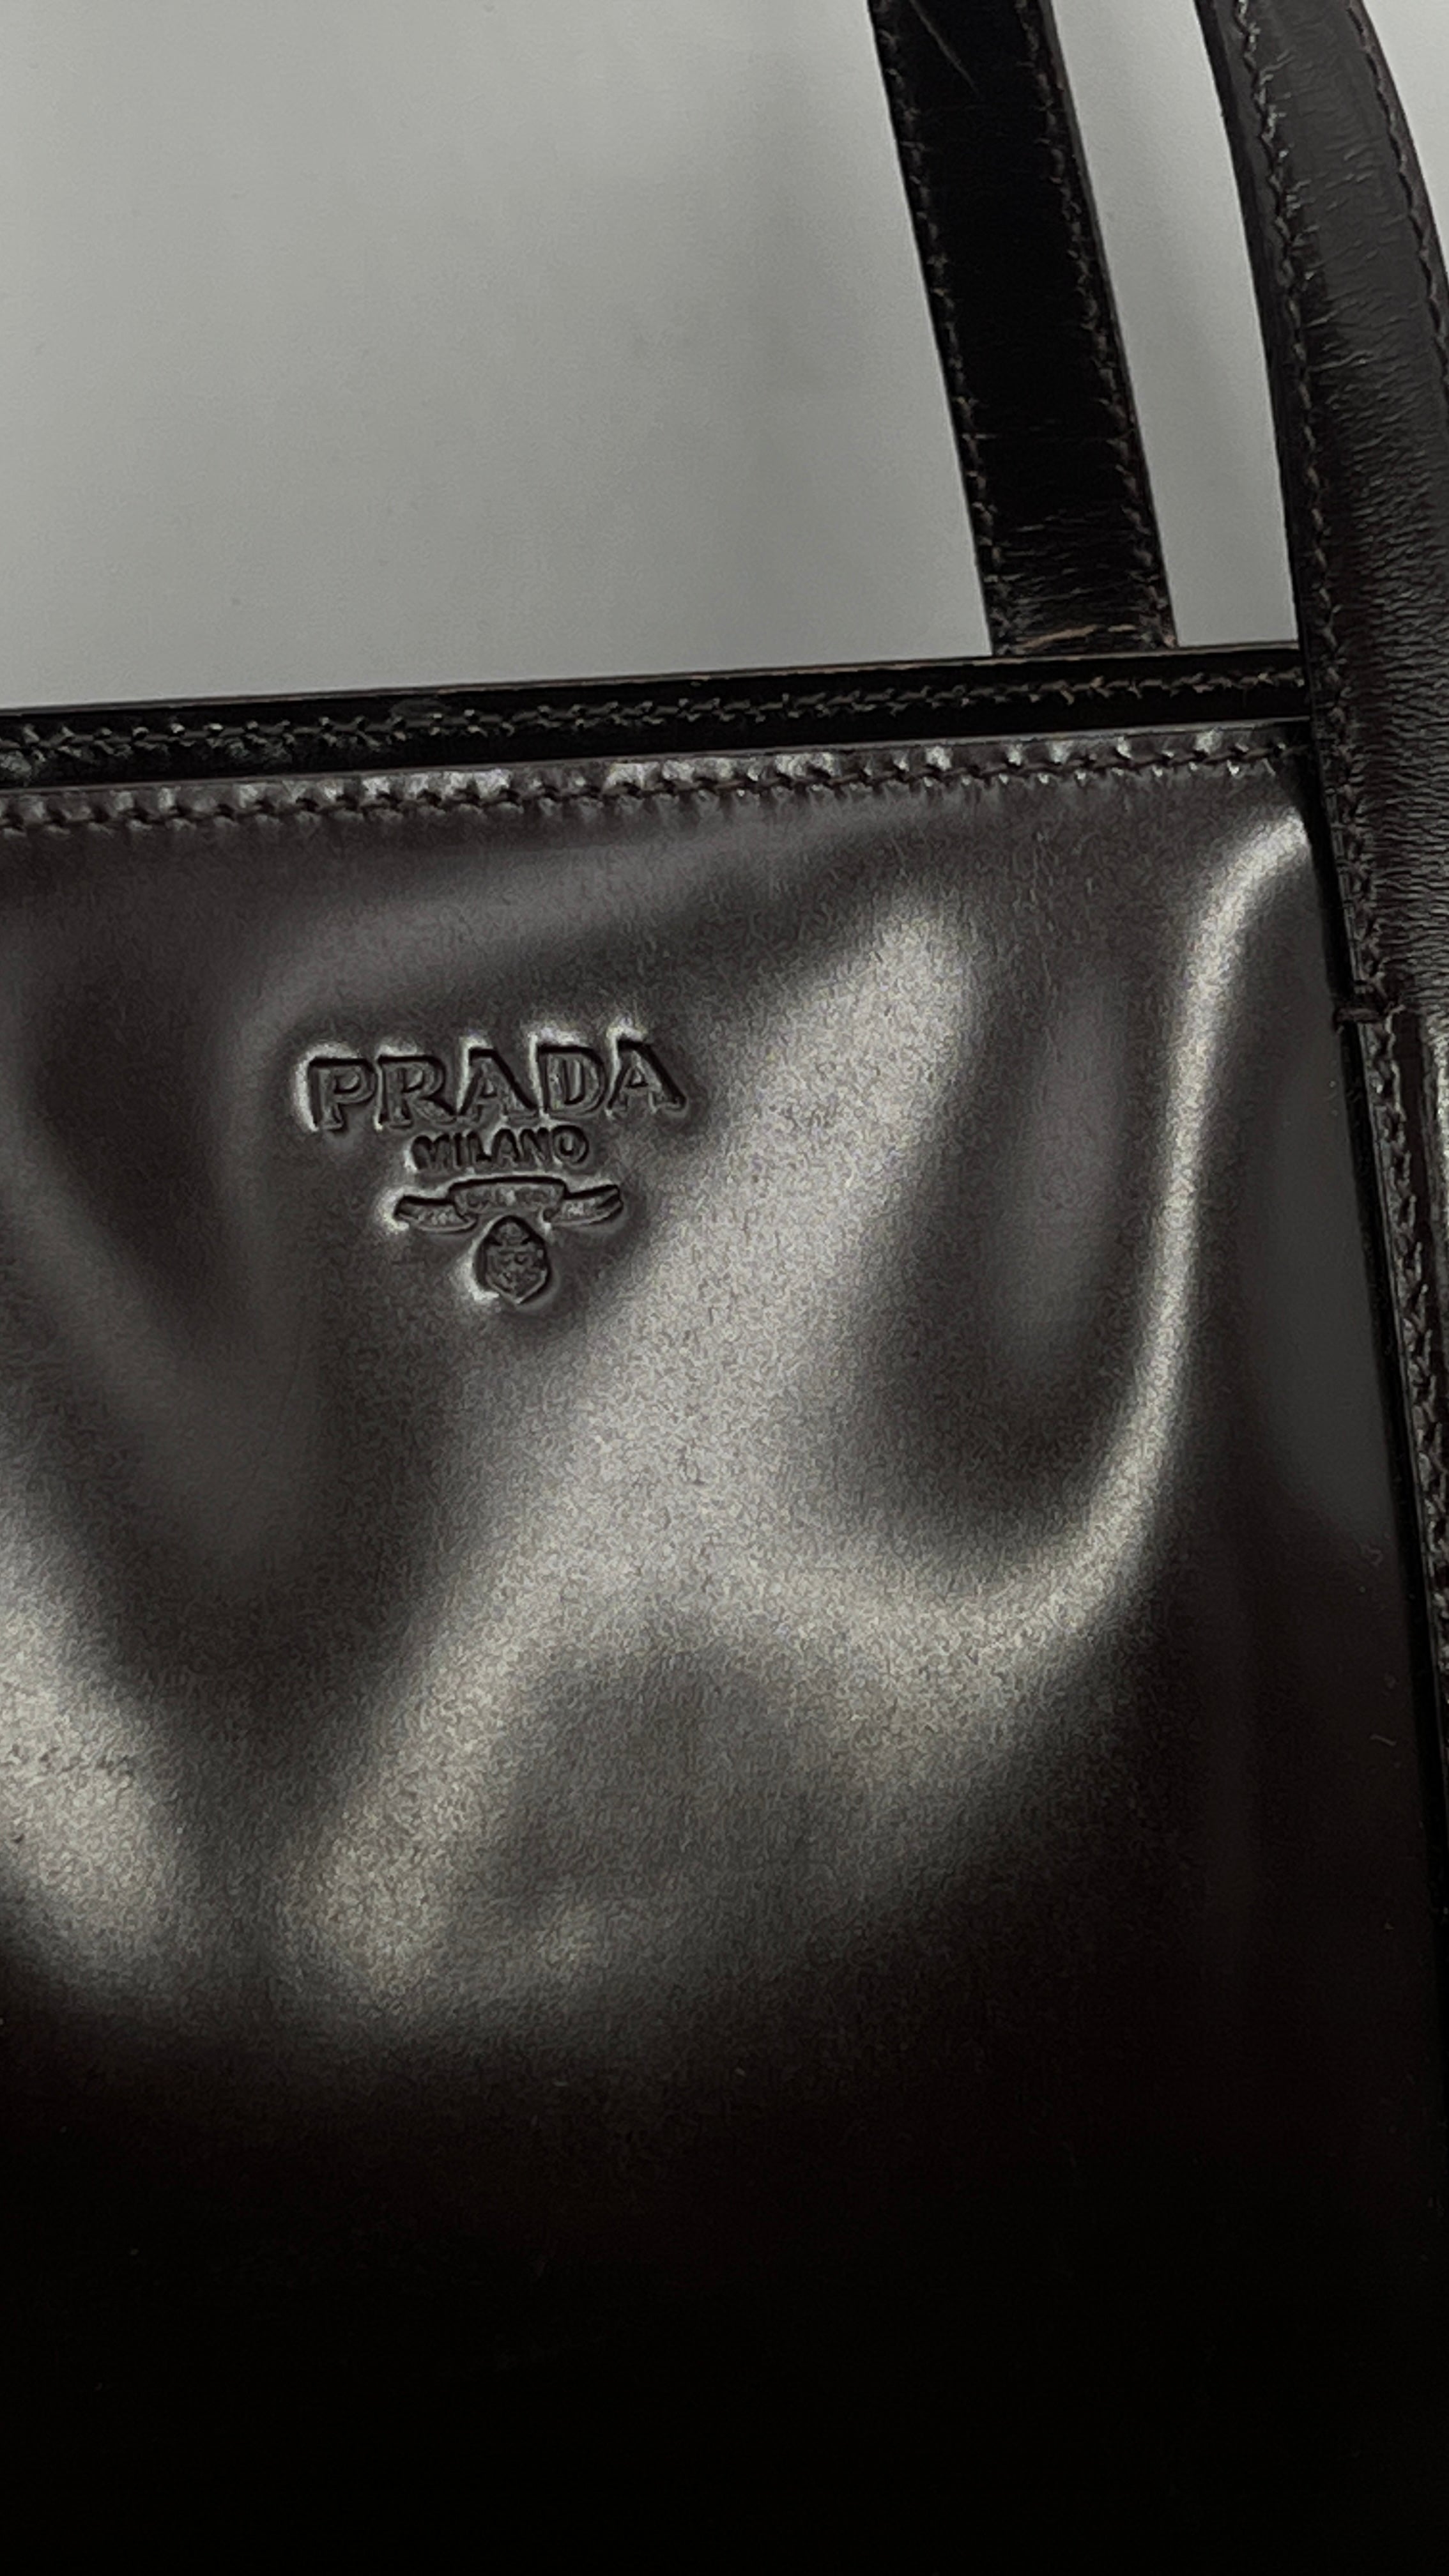 Prada grey tie dye patent leather tote bag at 1stDibs